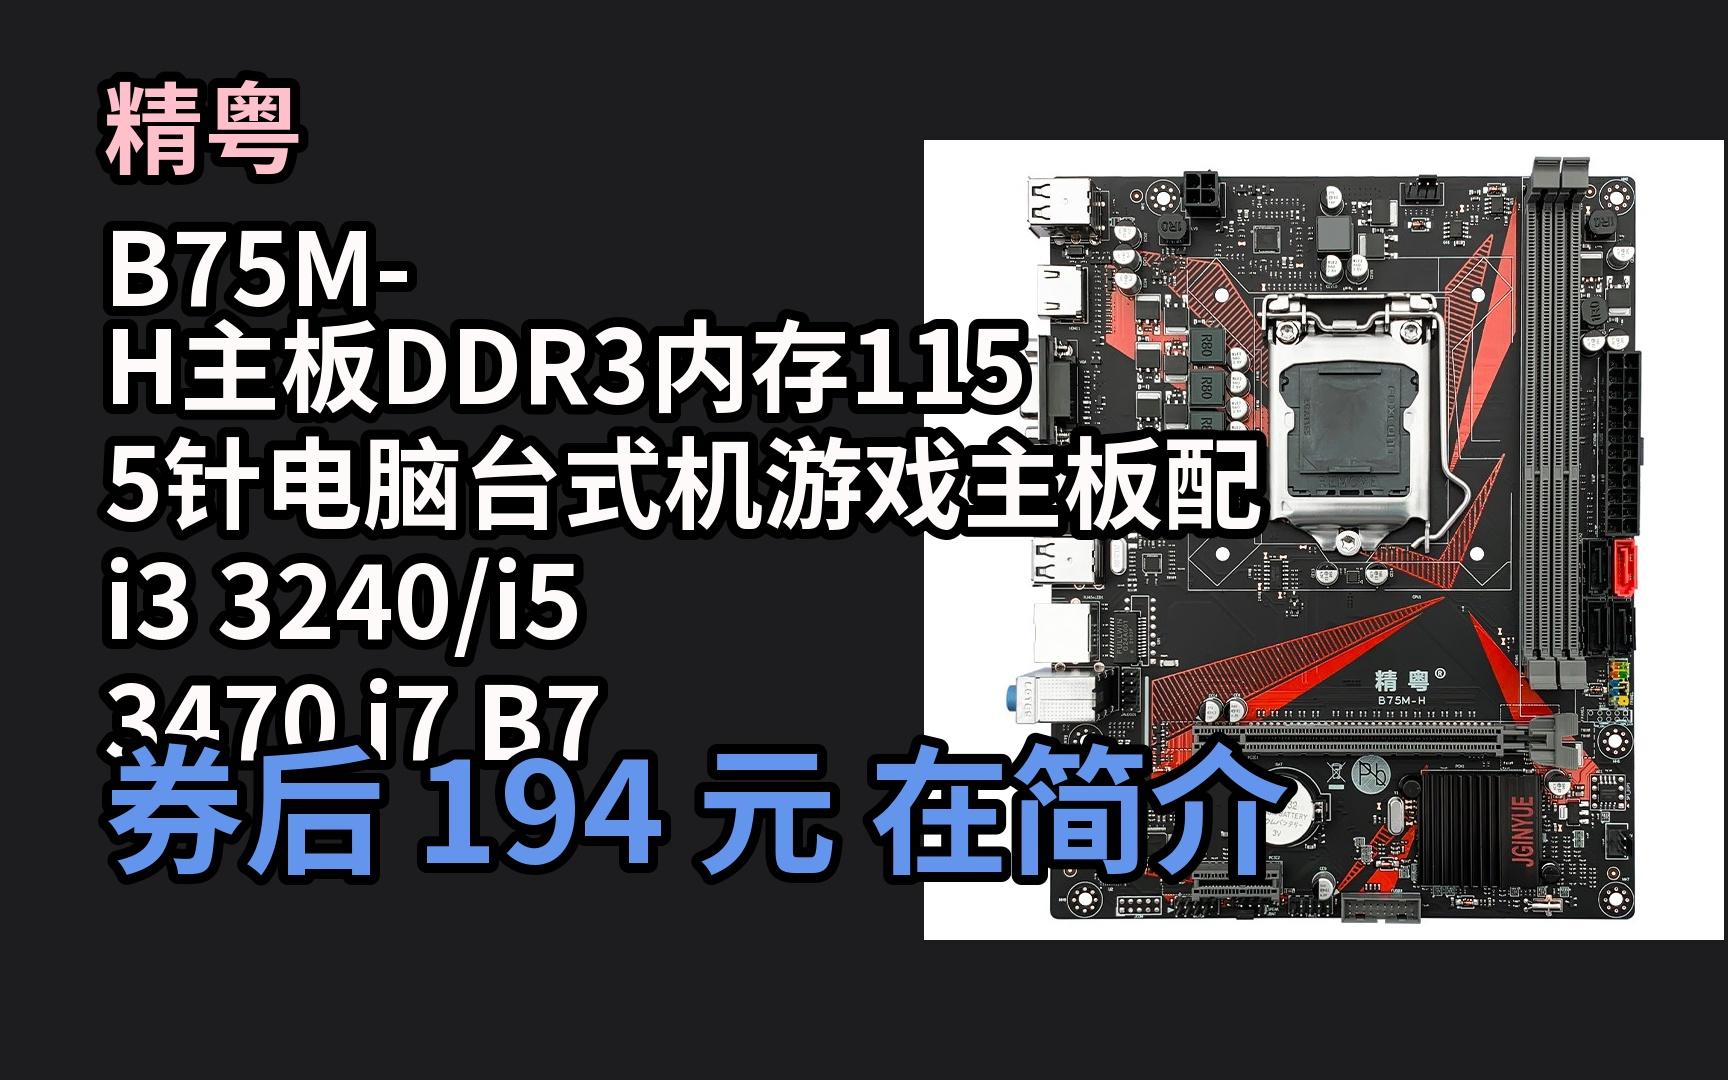 DDR3 内存主板套装挑选指南：挖掘潜能，获得最佳体验